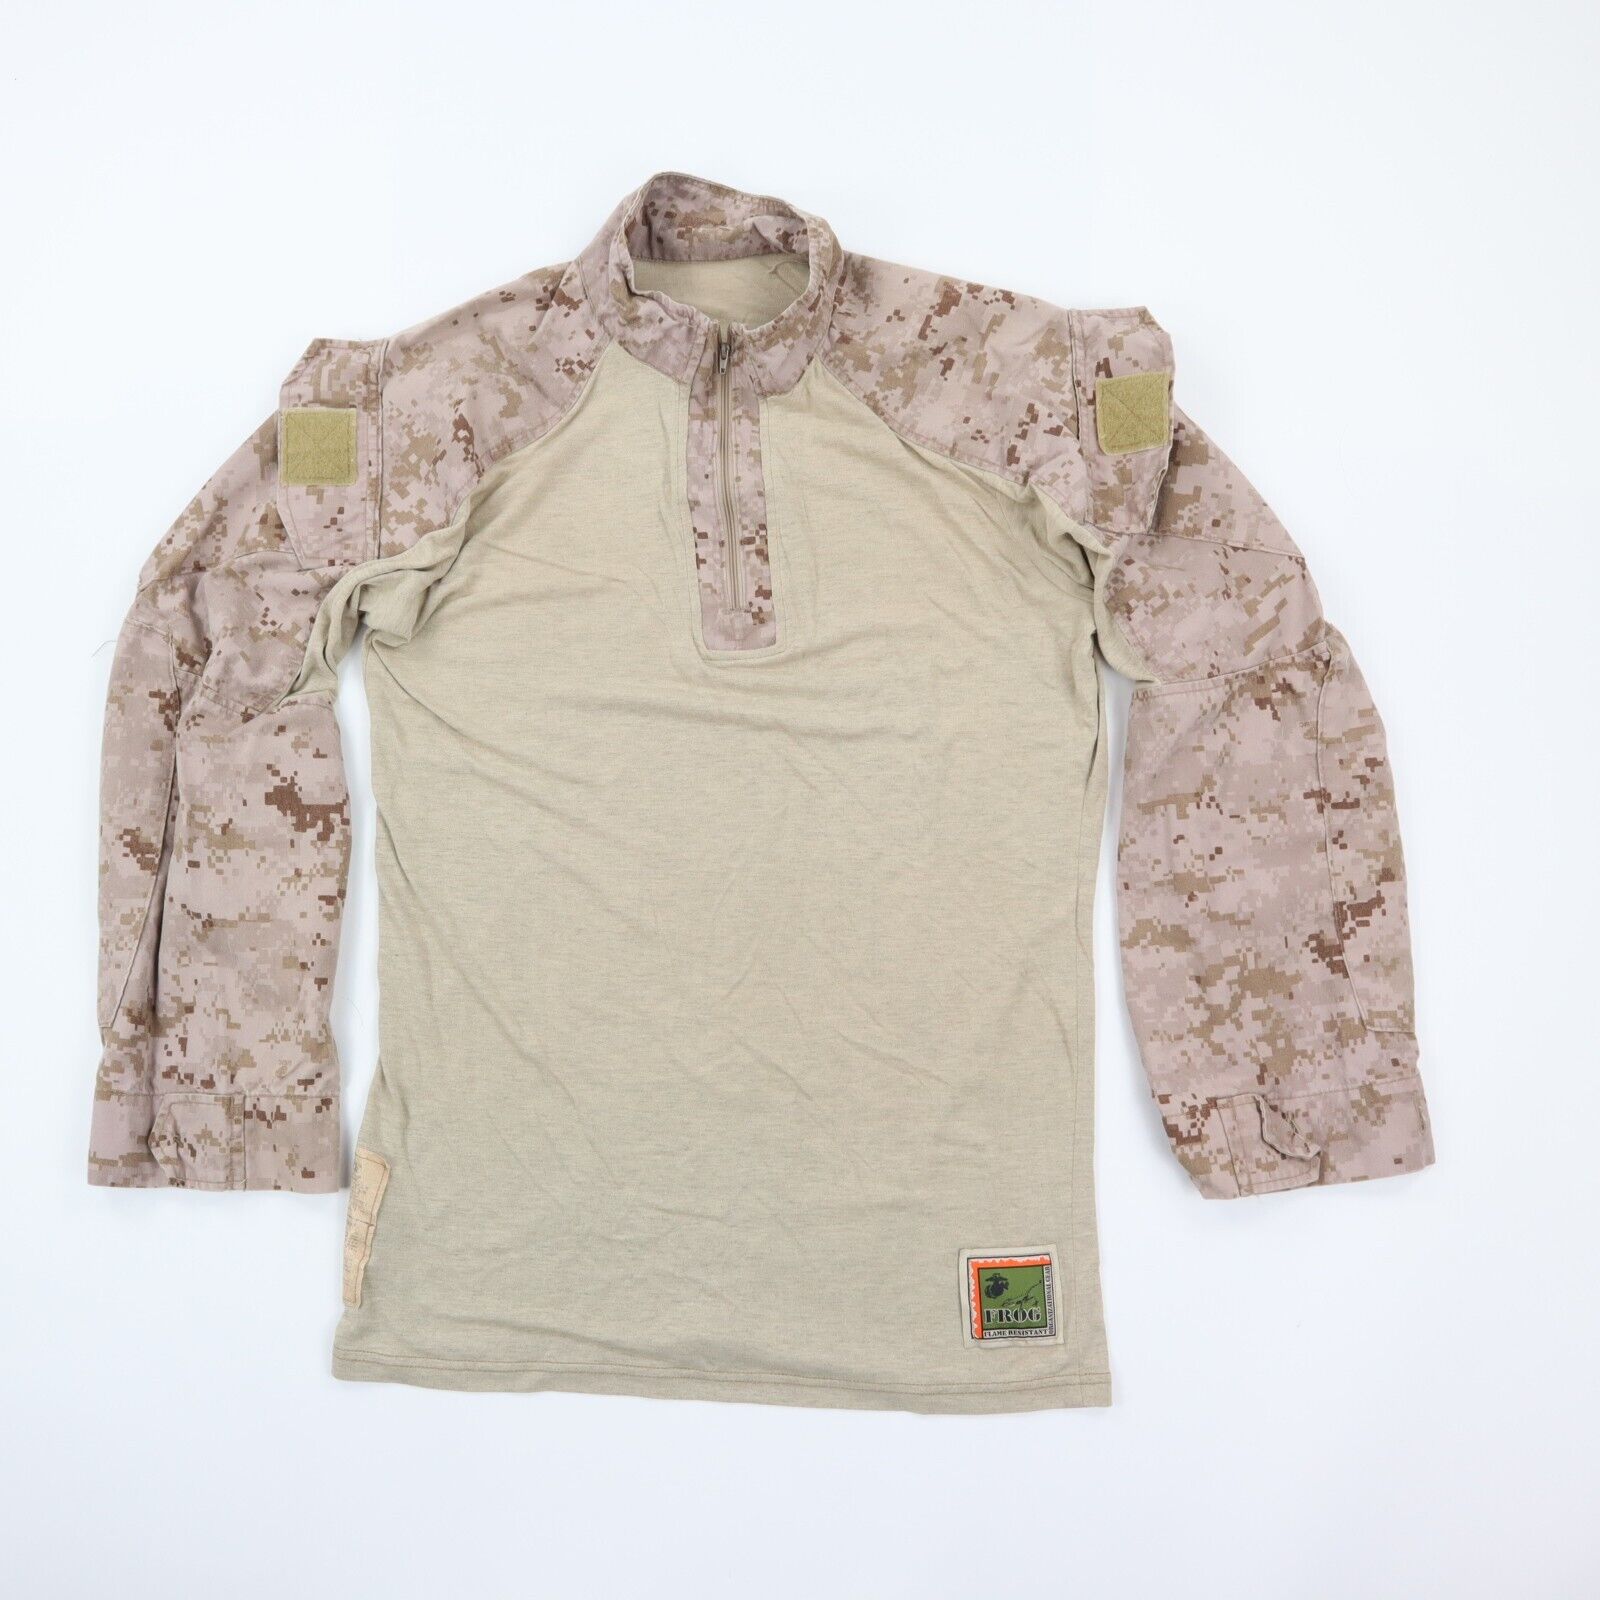 USN Frog Defender Military Shirt FR Combat Shirt Ensemble Desert Camo M Reg